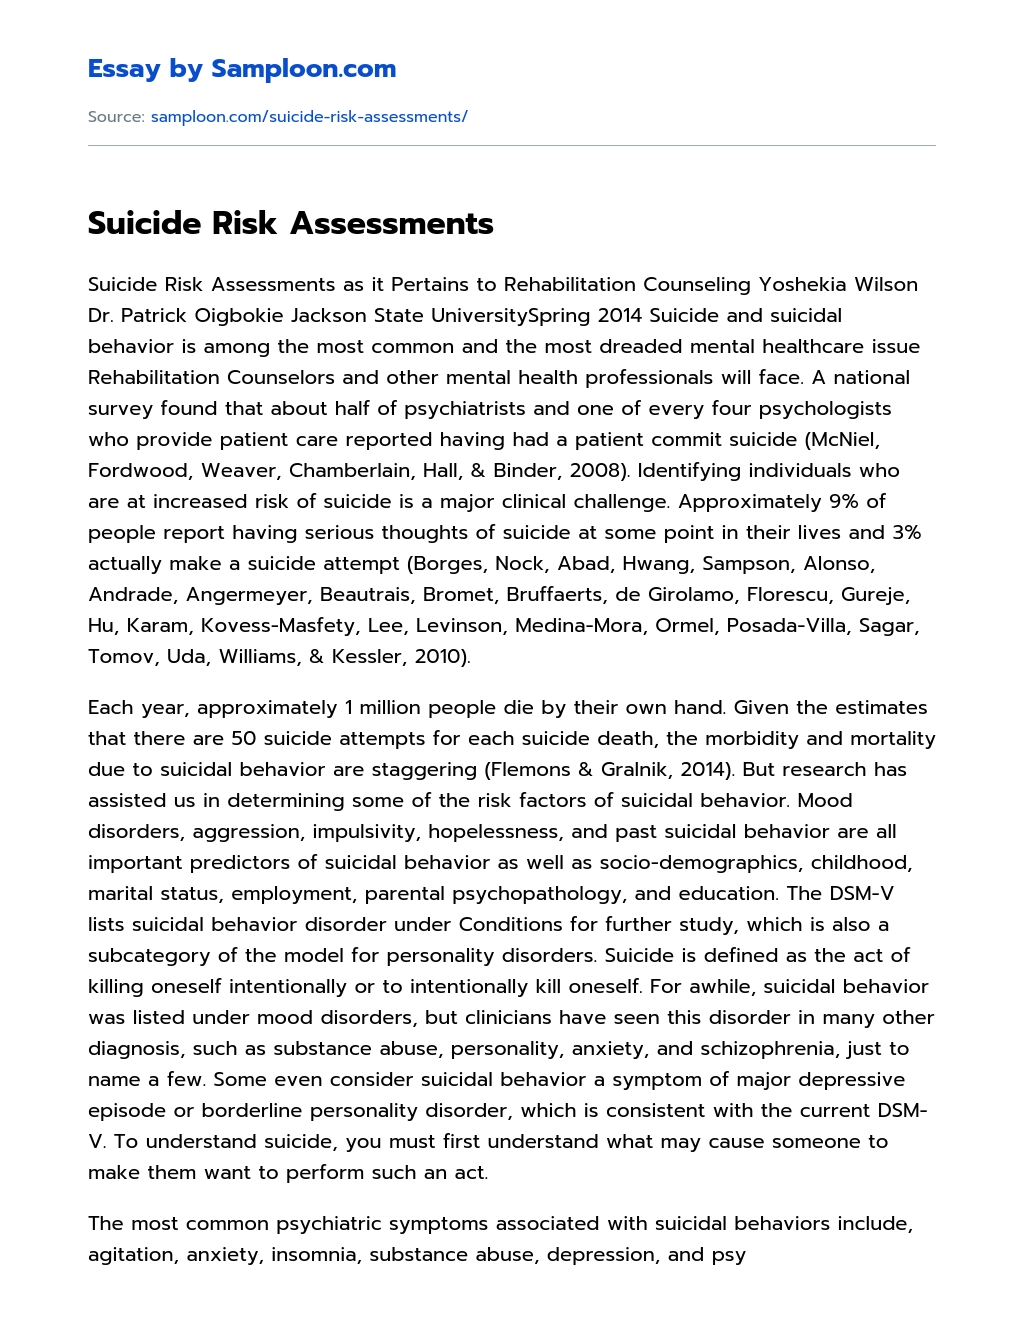 Suicide Risk Assessments essay